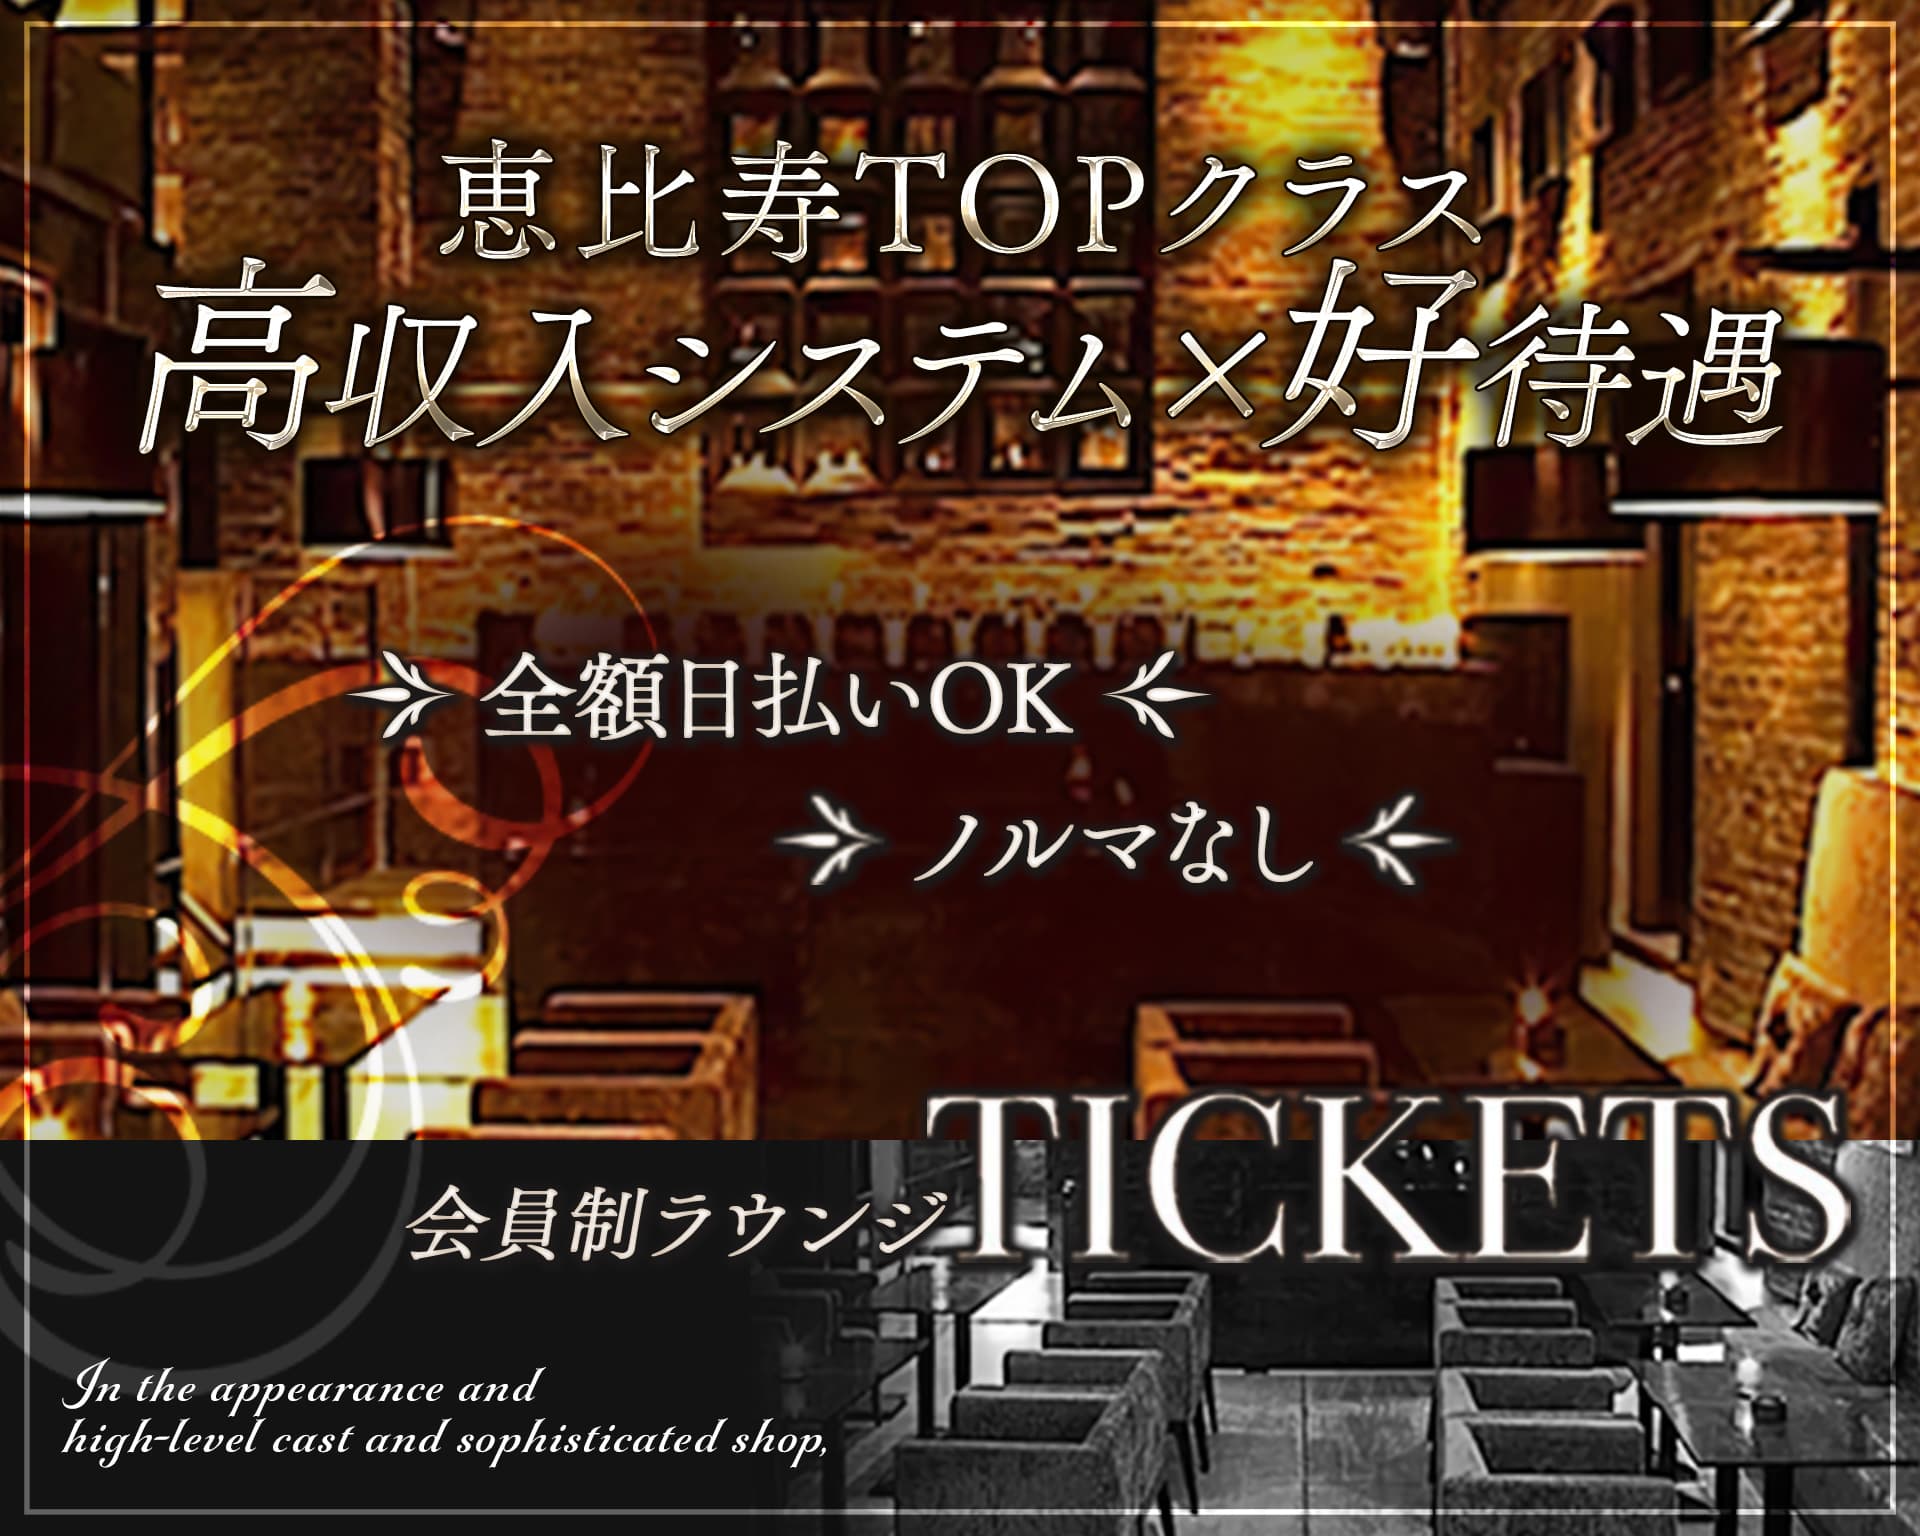 Tickets（チケッツ）【公式体入・求人情報】 恵比寿ラウンジ TOP画像